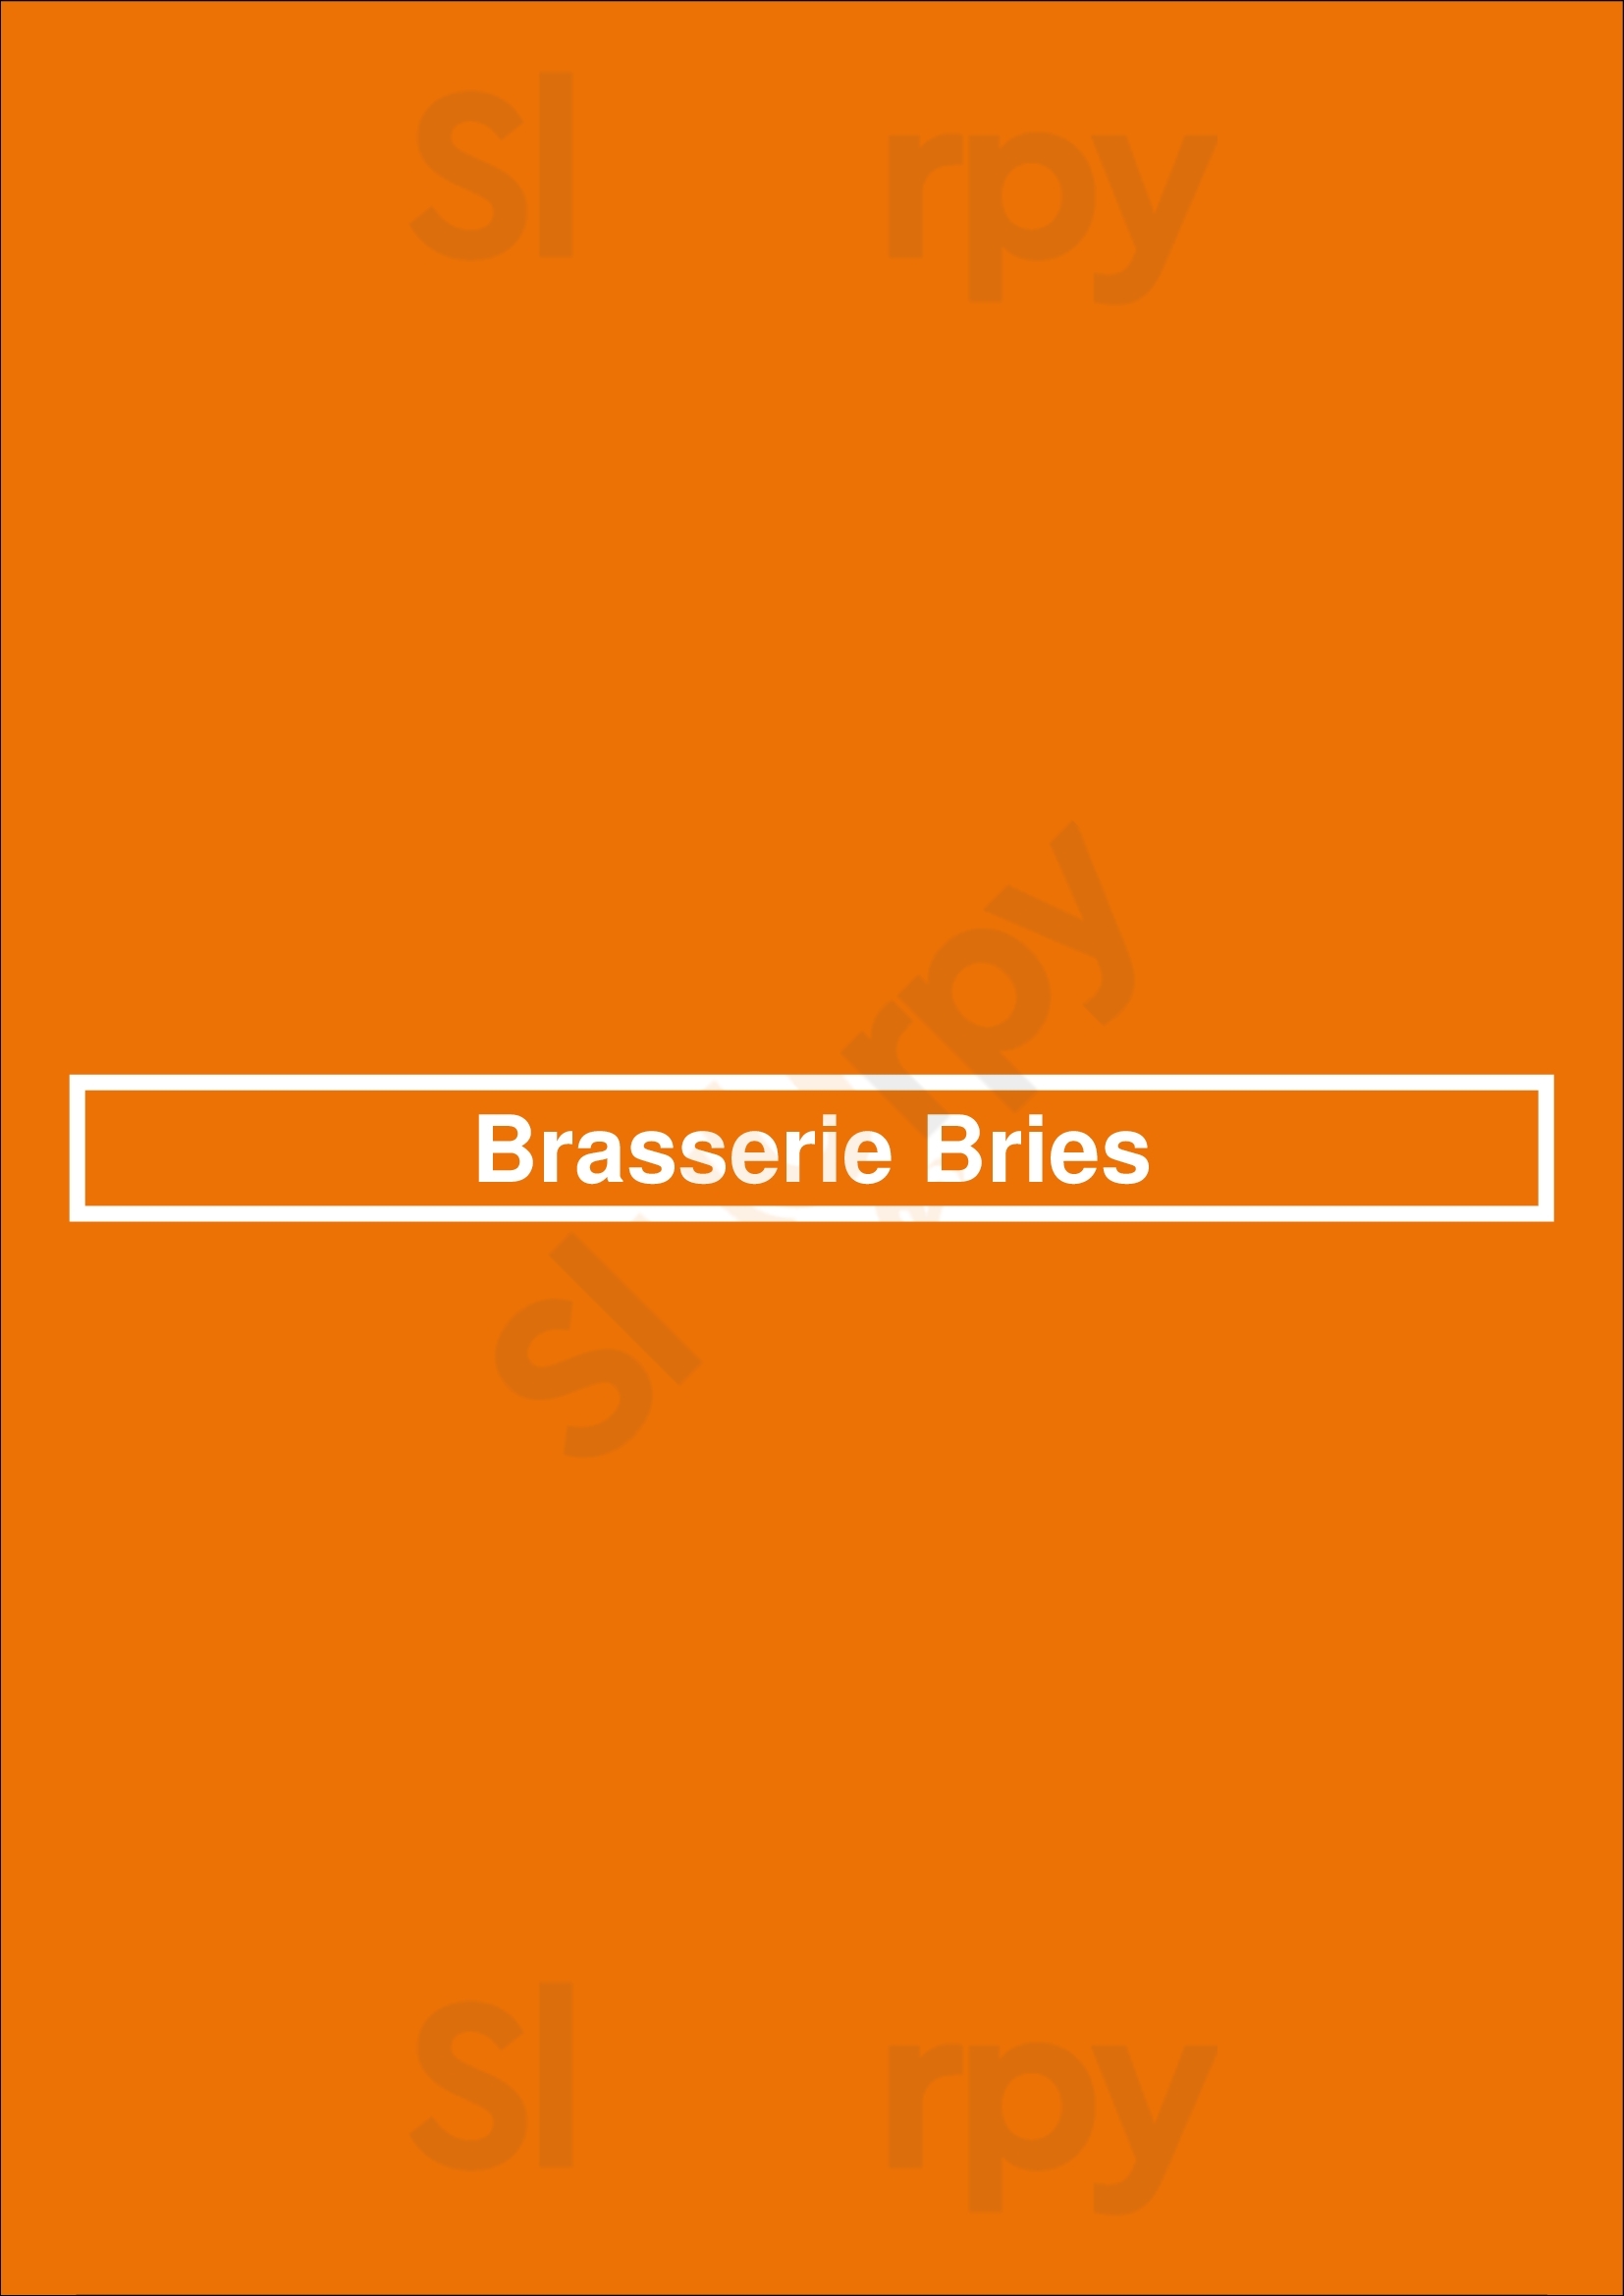 Brasserie Bries Renesse Menu - 1